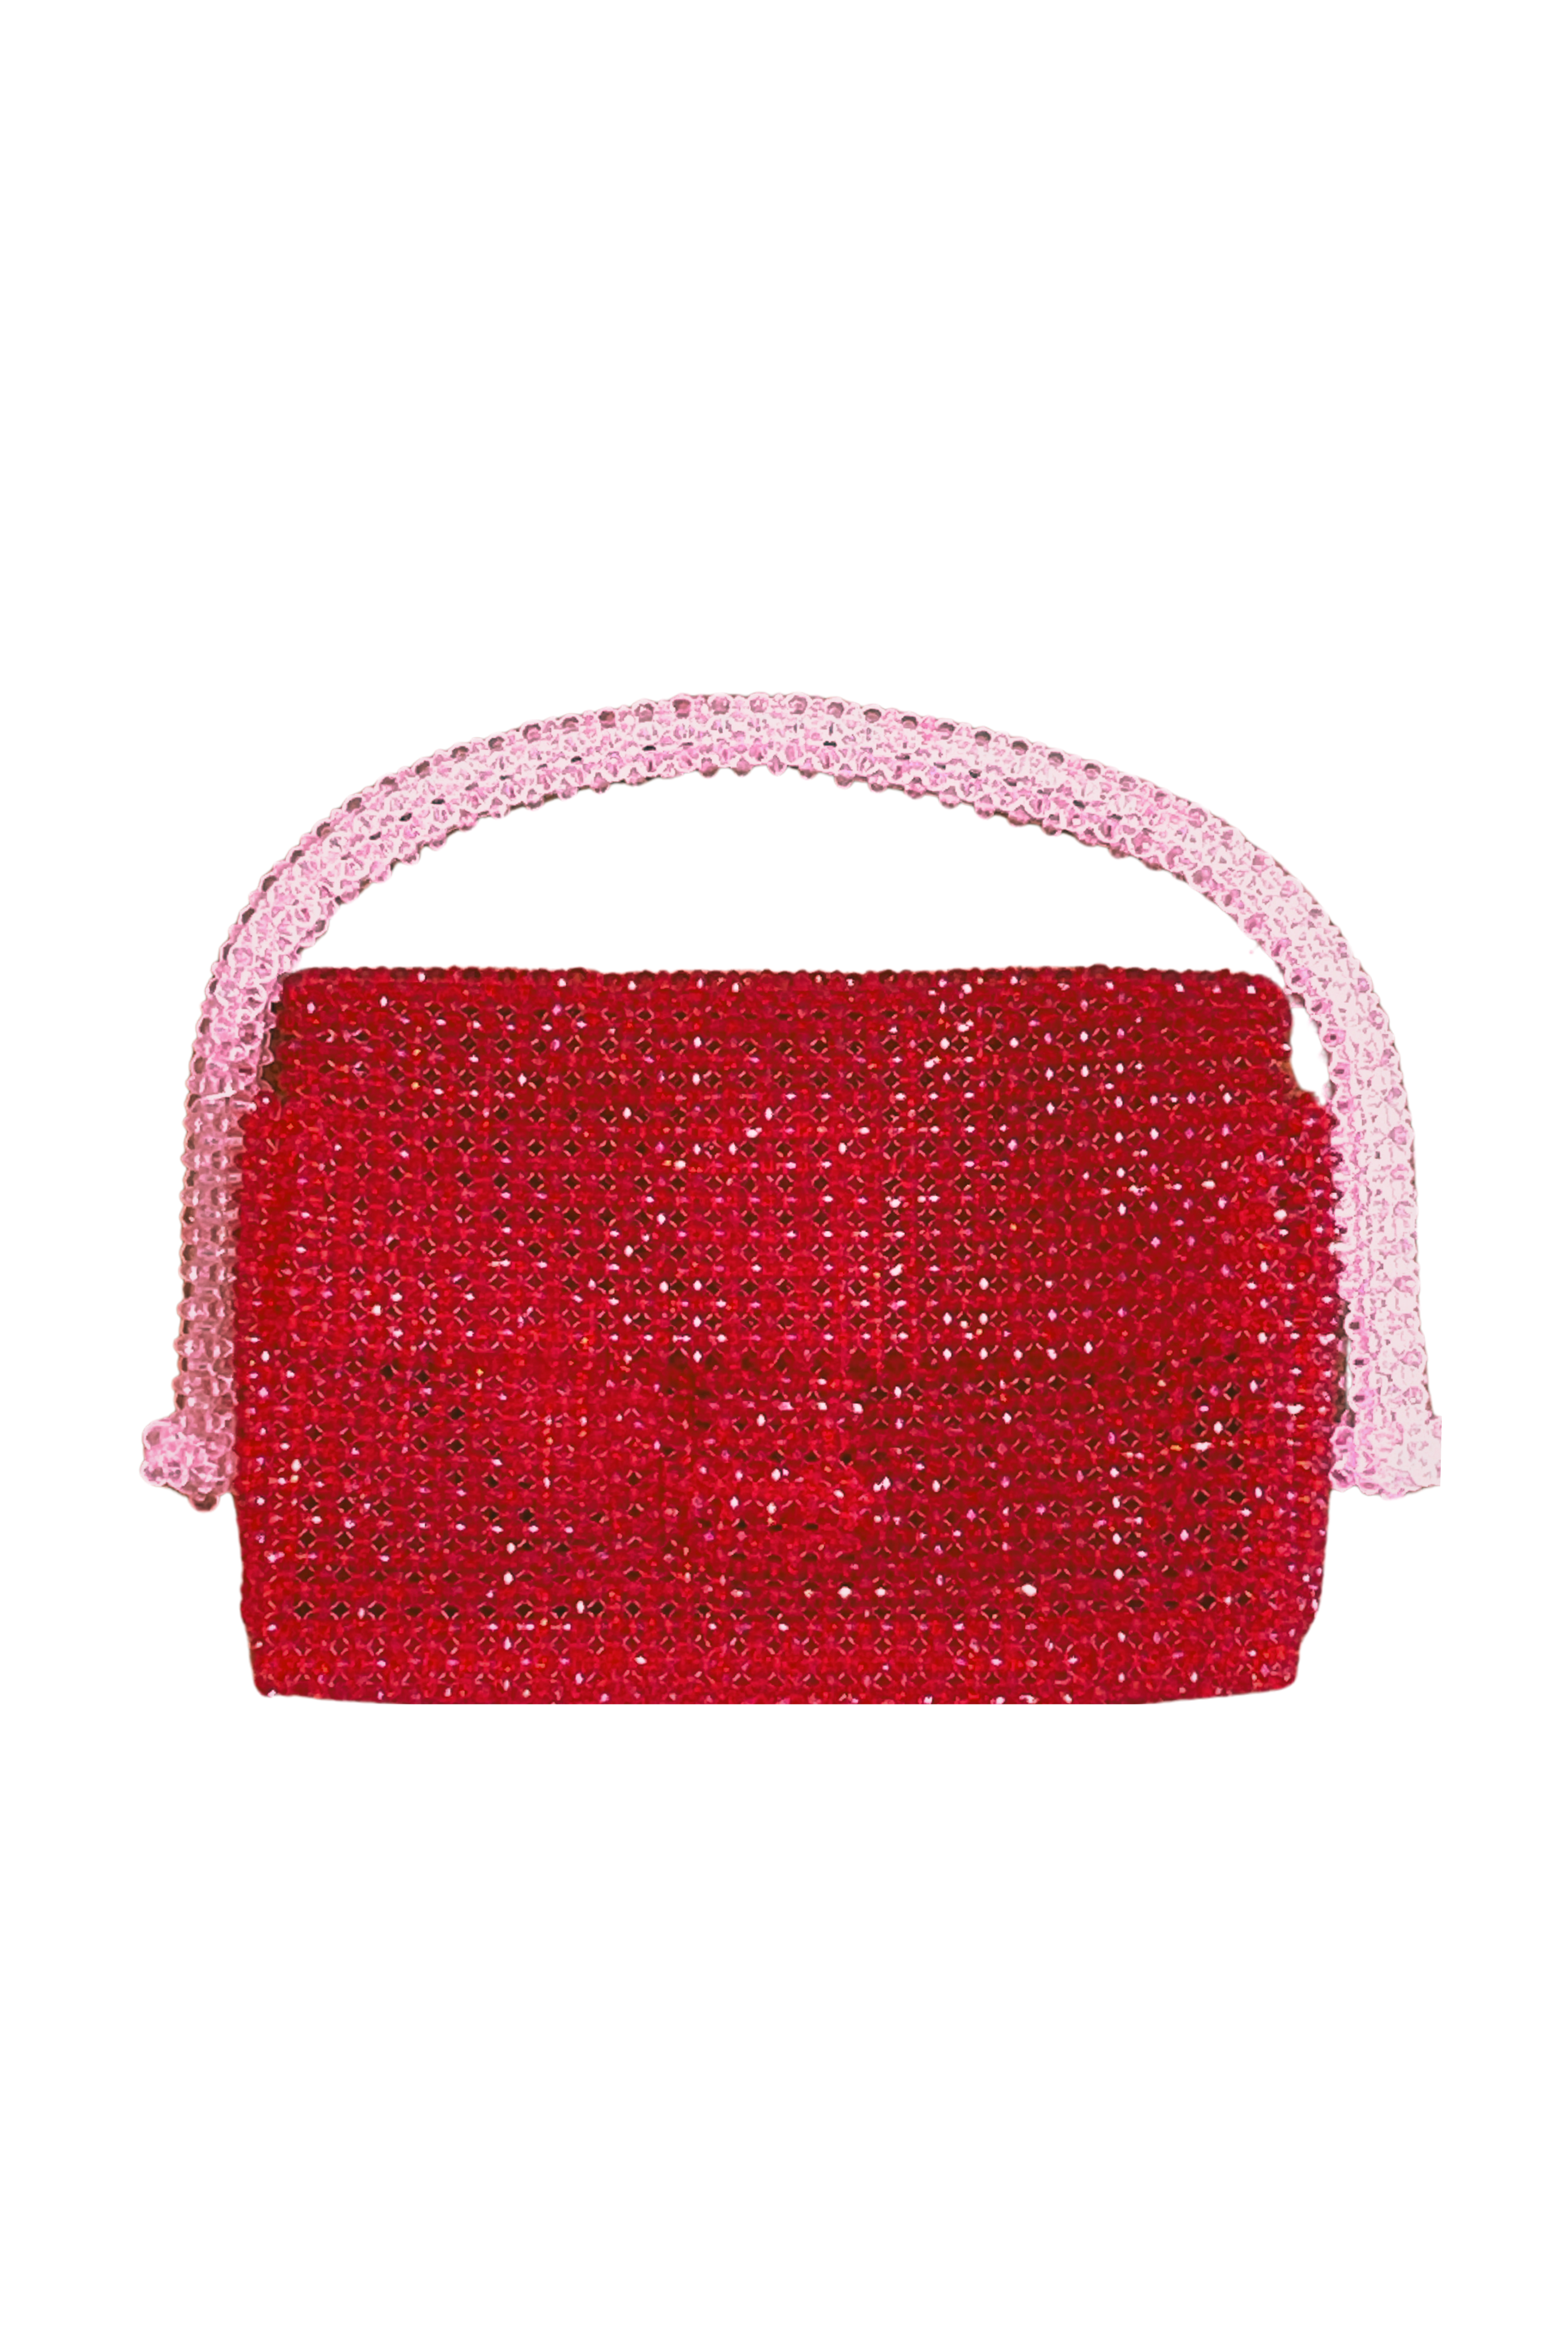 LISA FOLAWIYO Beaded Classic Handbag in Red